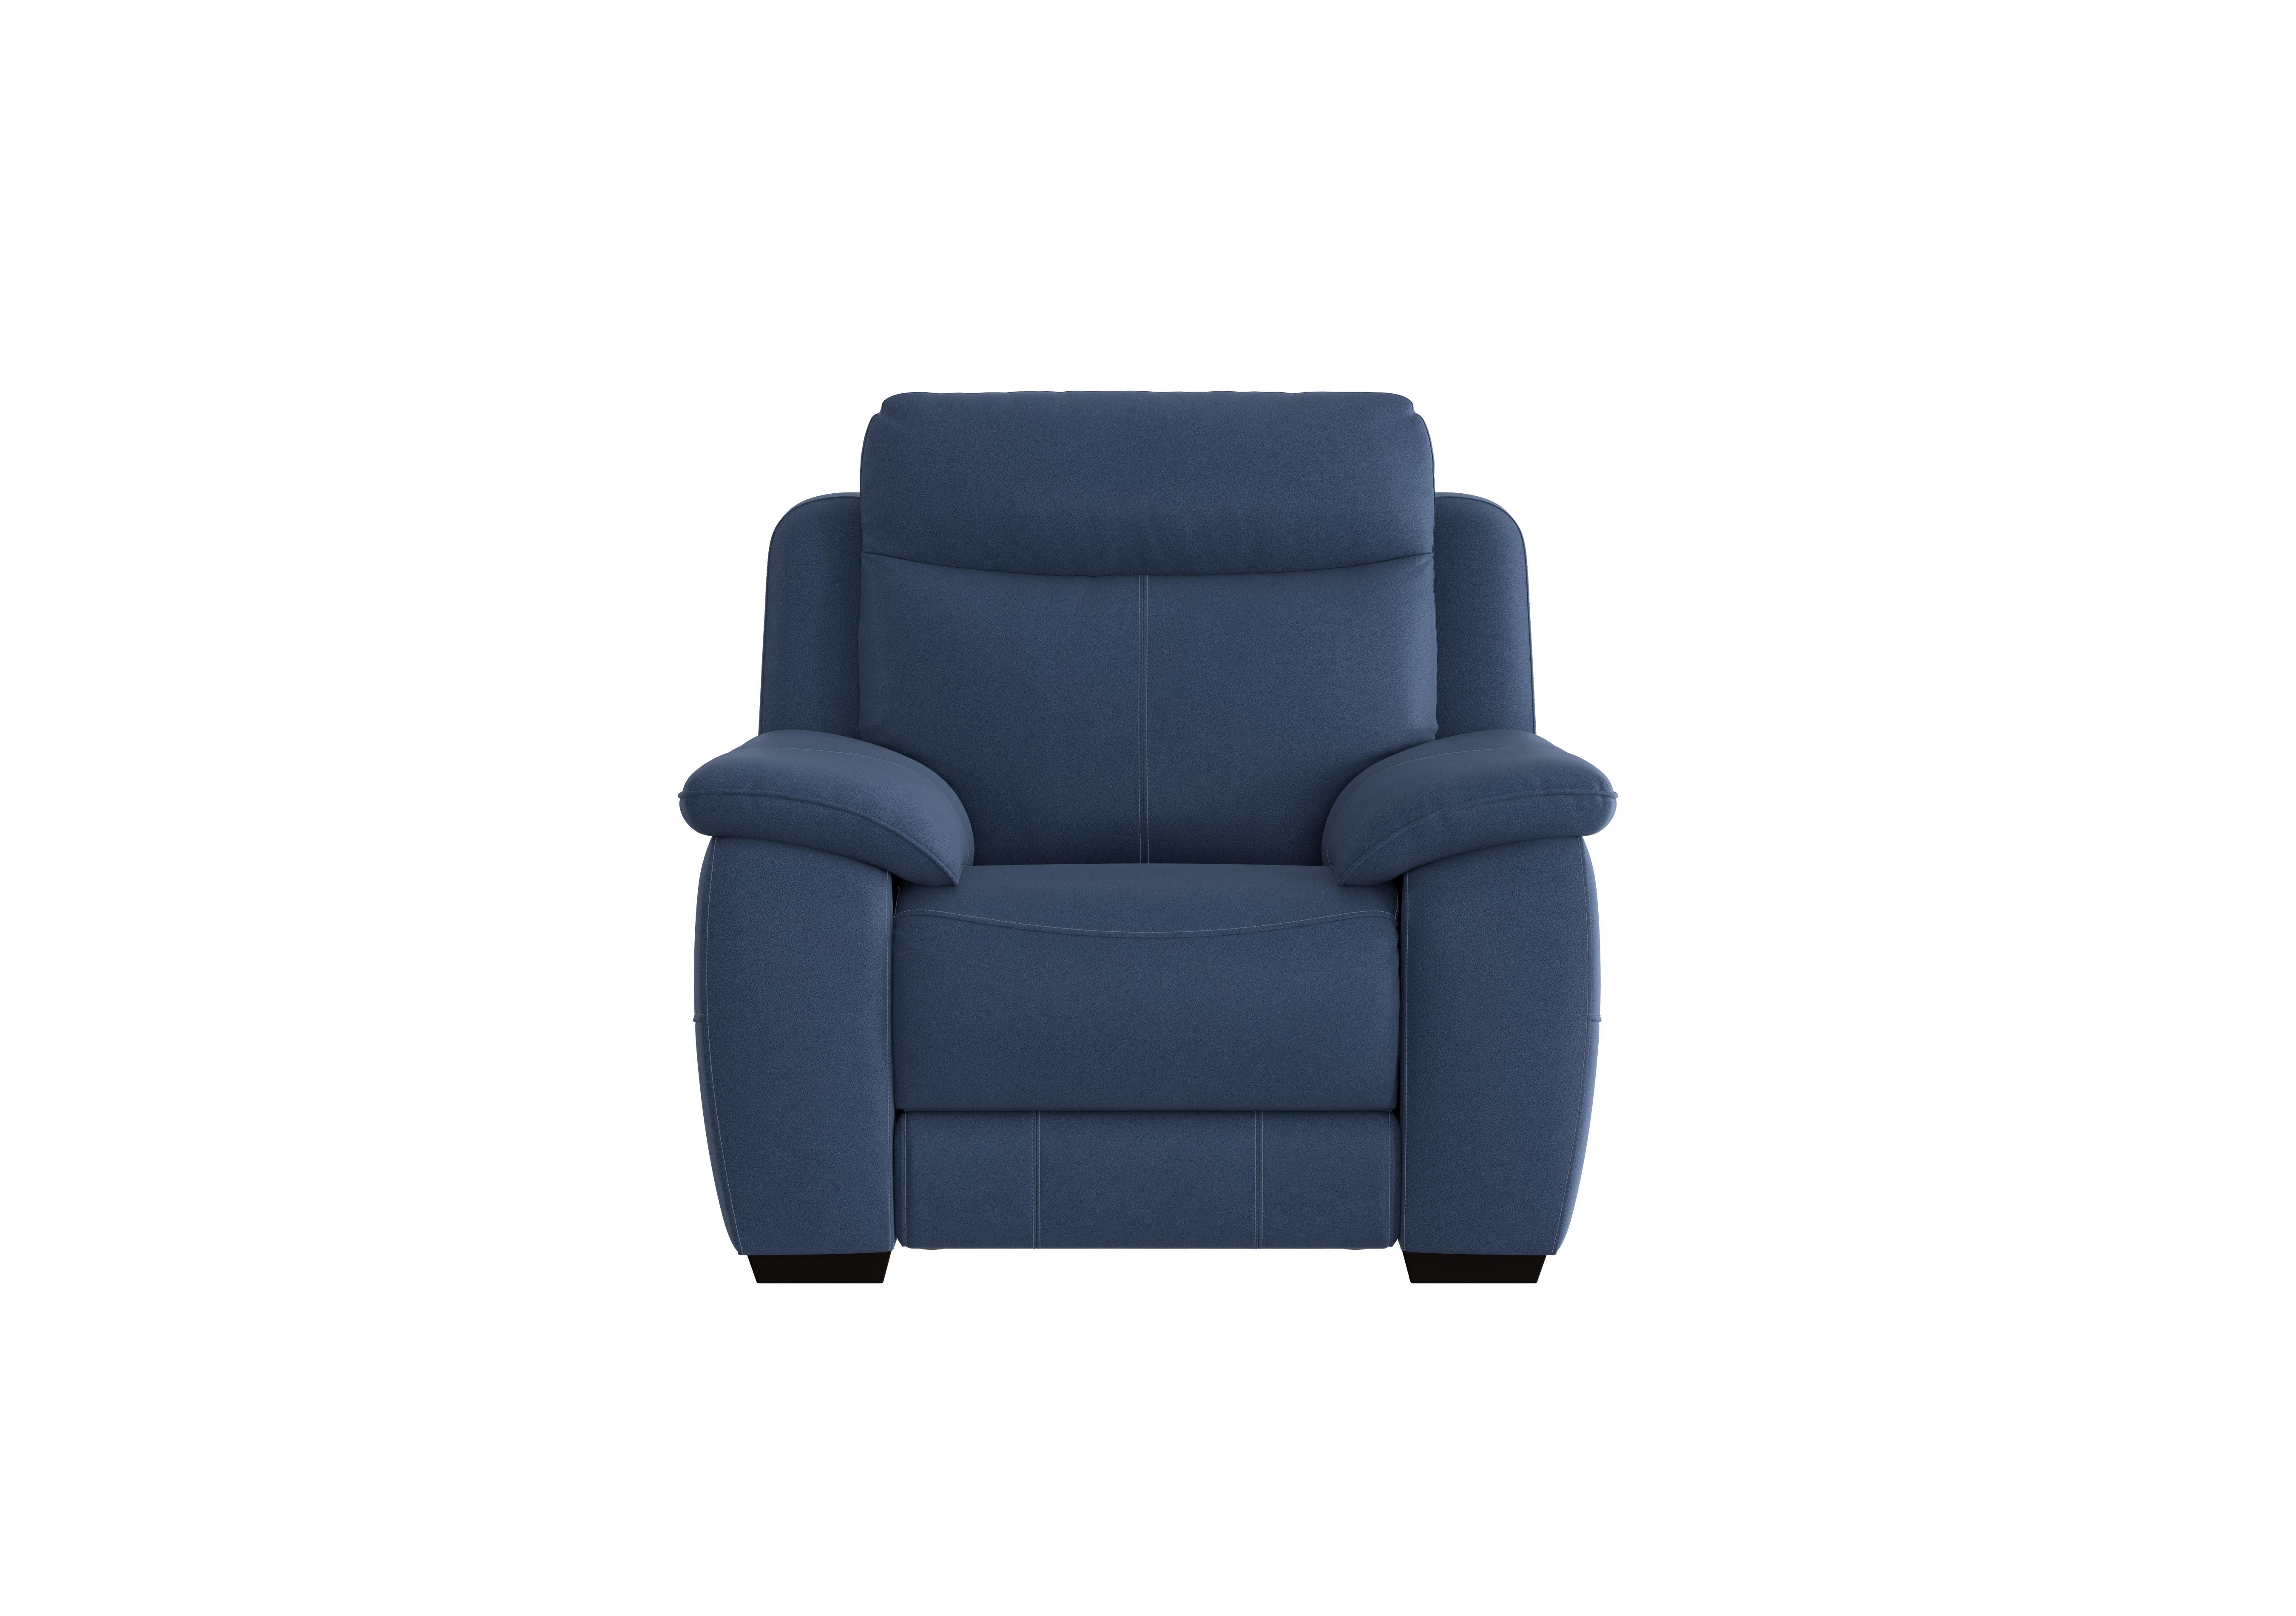 Starlight Express Fabric Armchair in Bfa-Blj-R10 Blue on Furniture Village